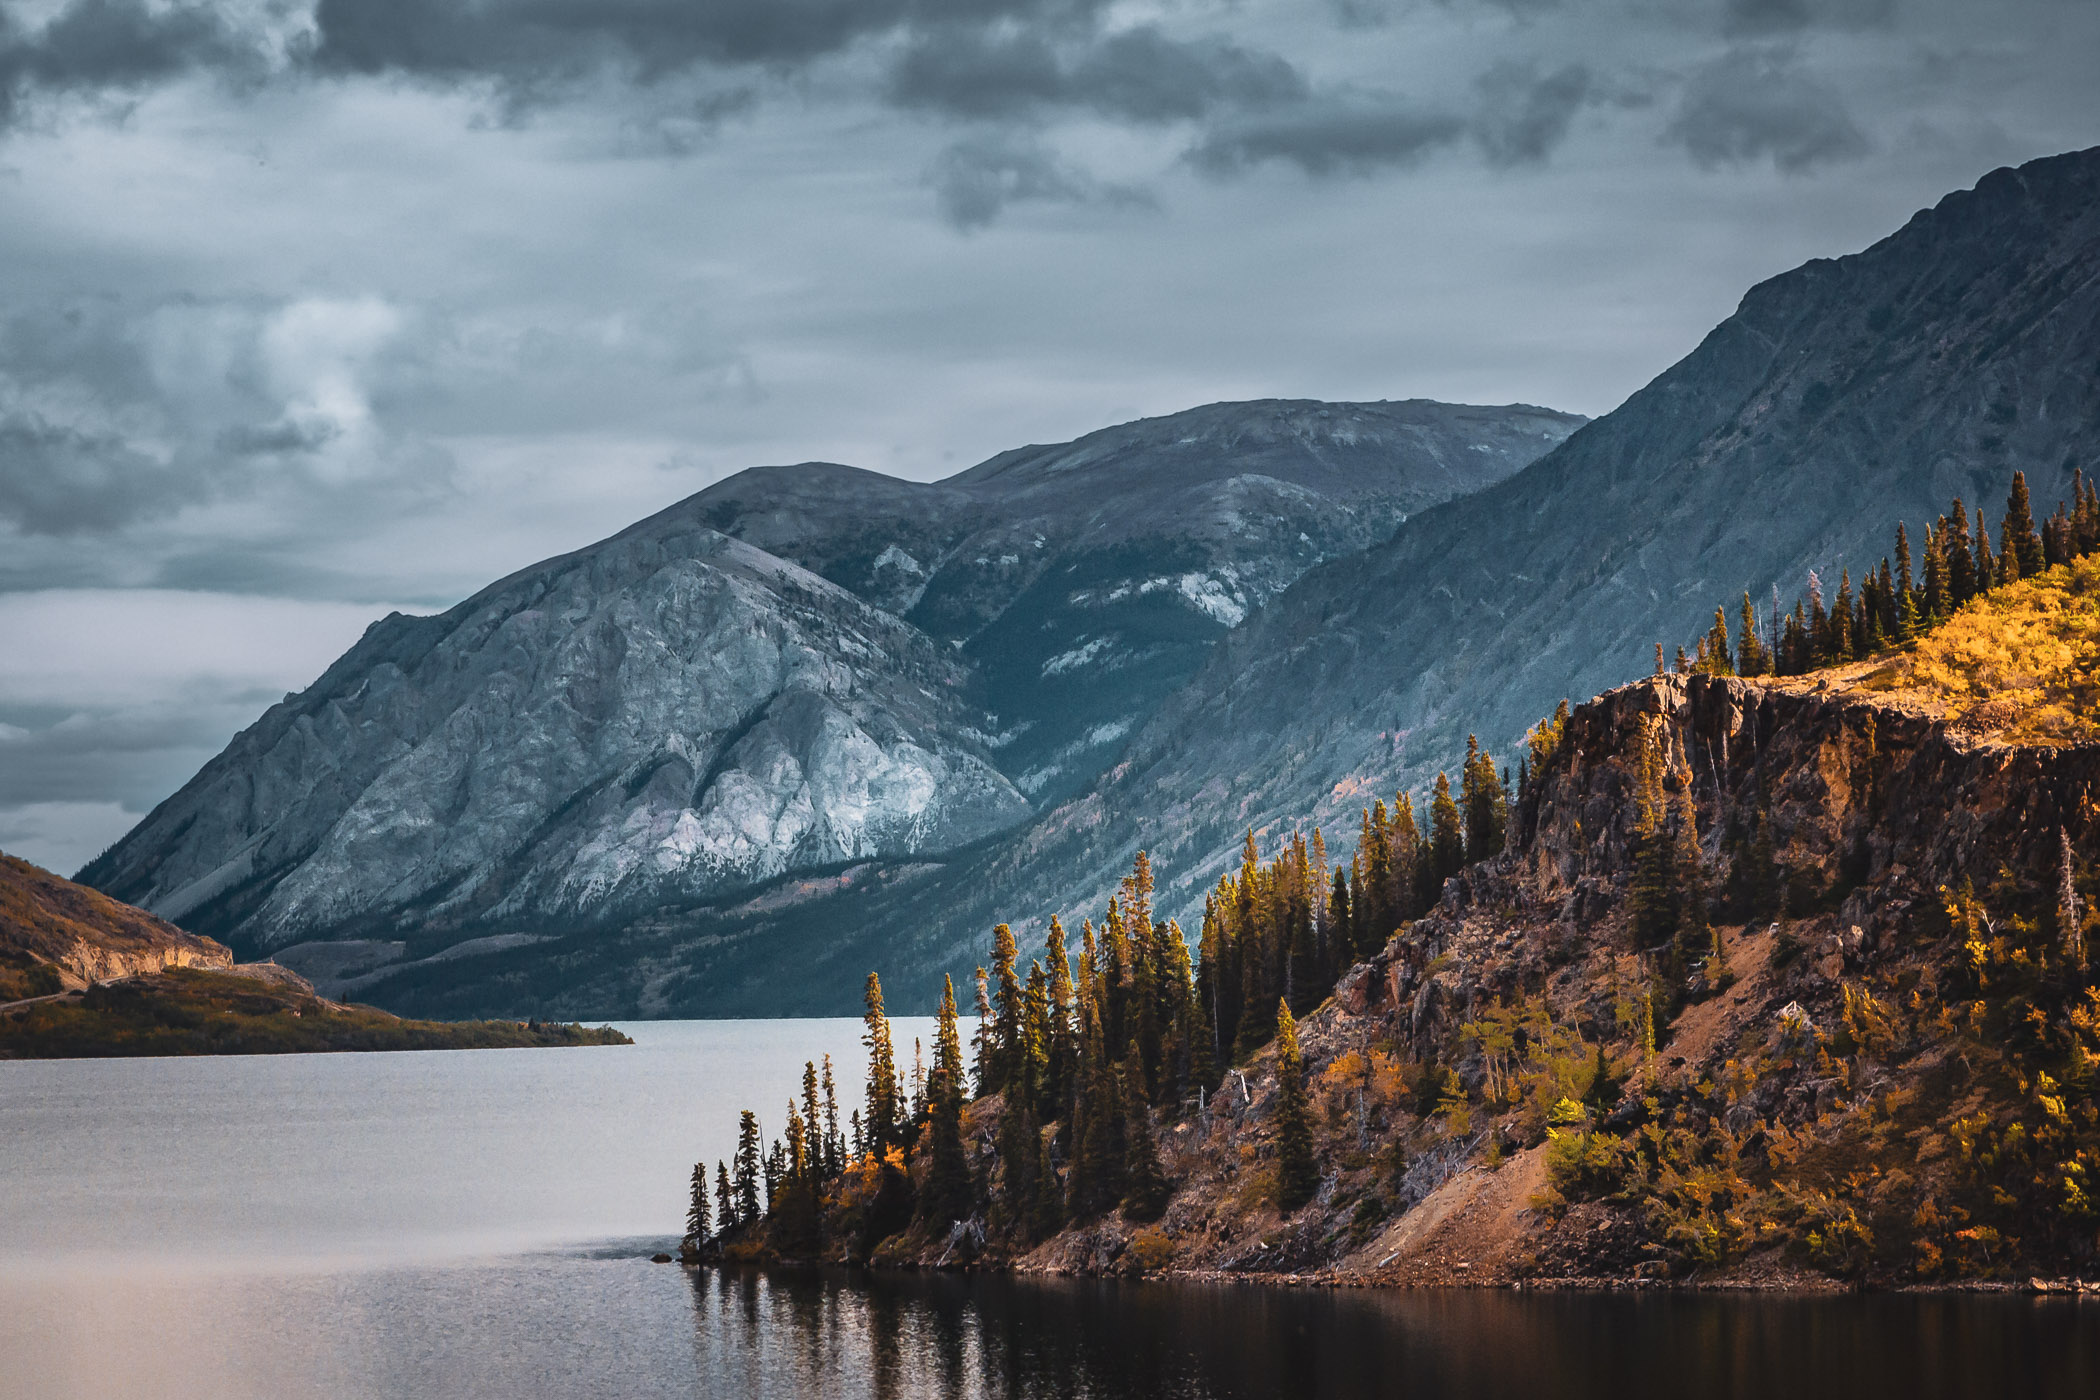 The rugged, mountainous landscape of Tagish Lake, near the Yukon Territory-British Columbia border, Canada.